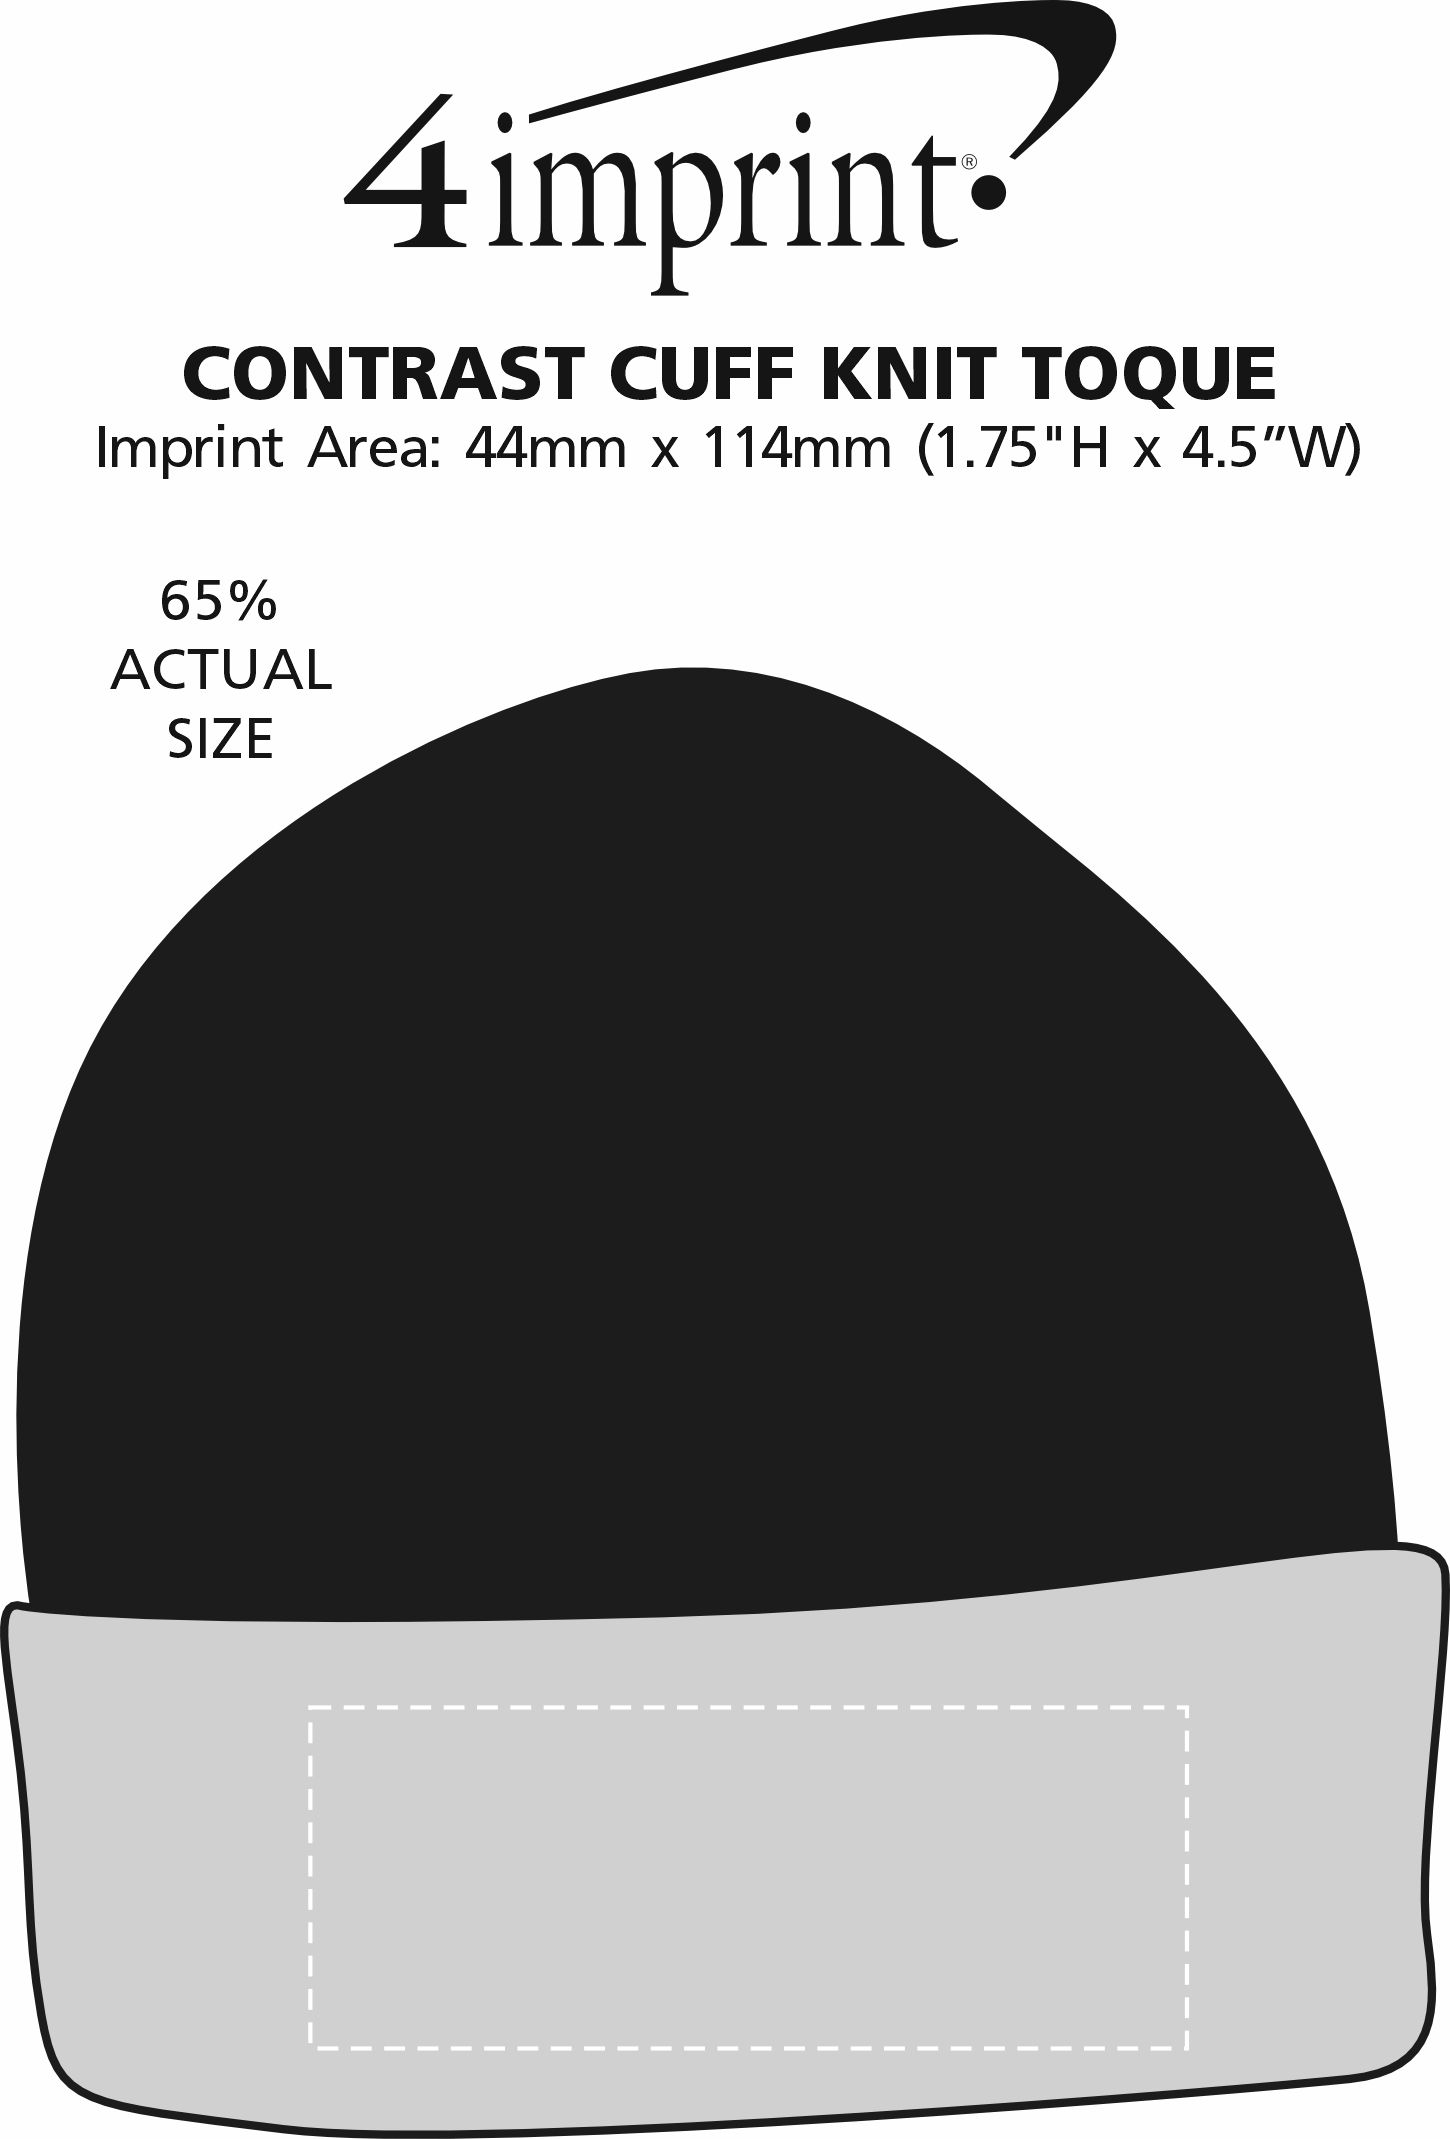 Imprint Area of Contrast Cuff Knit Toque